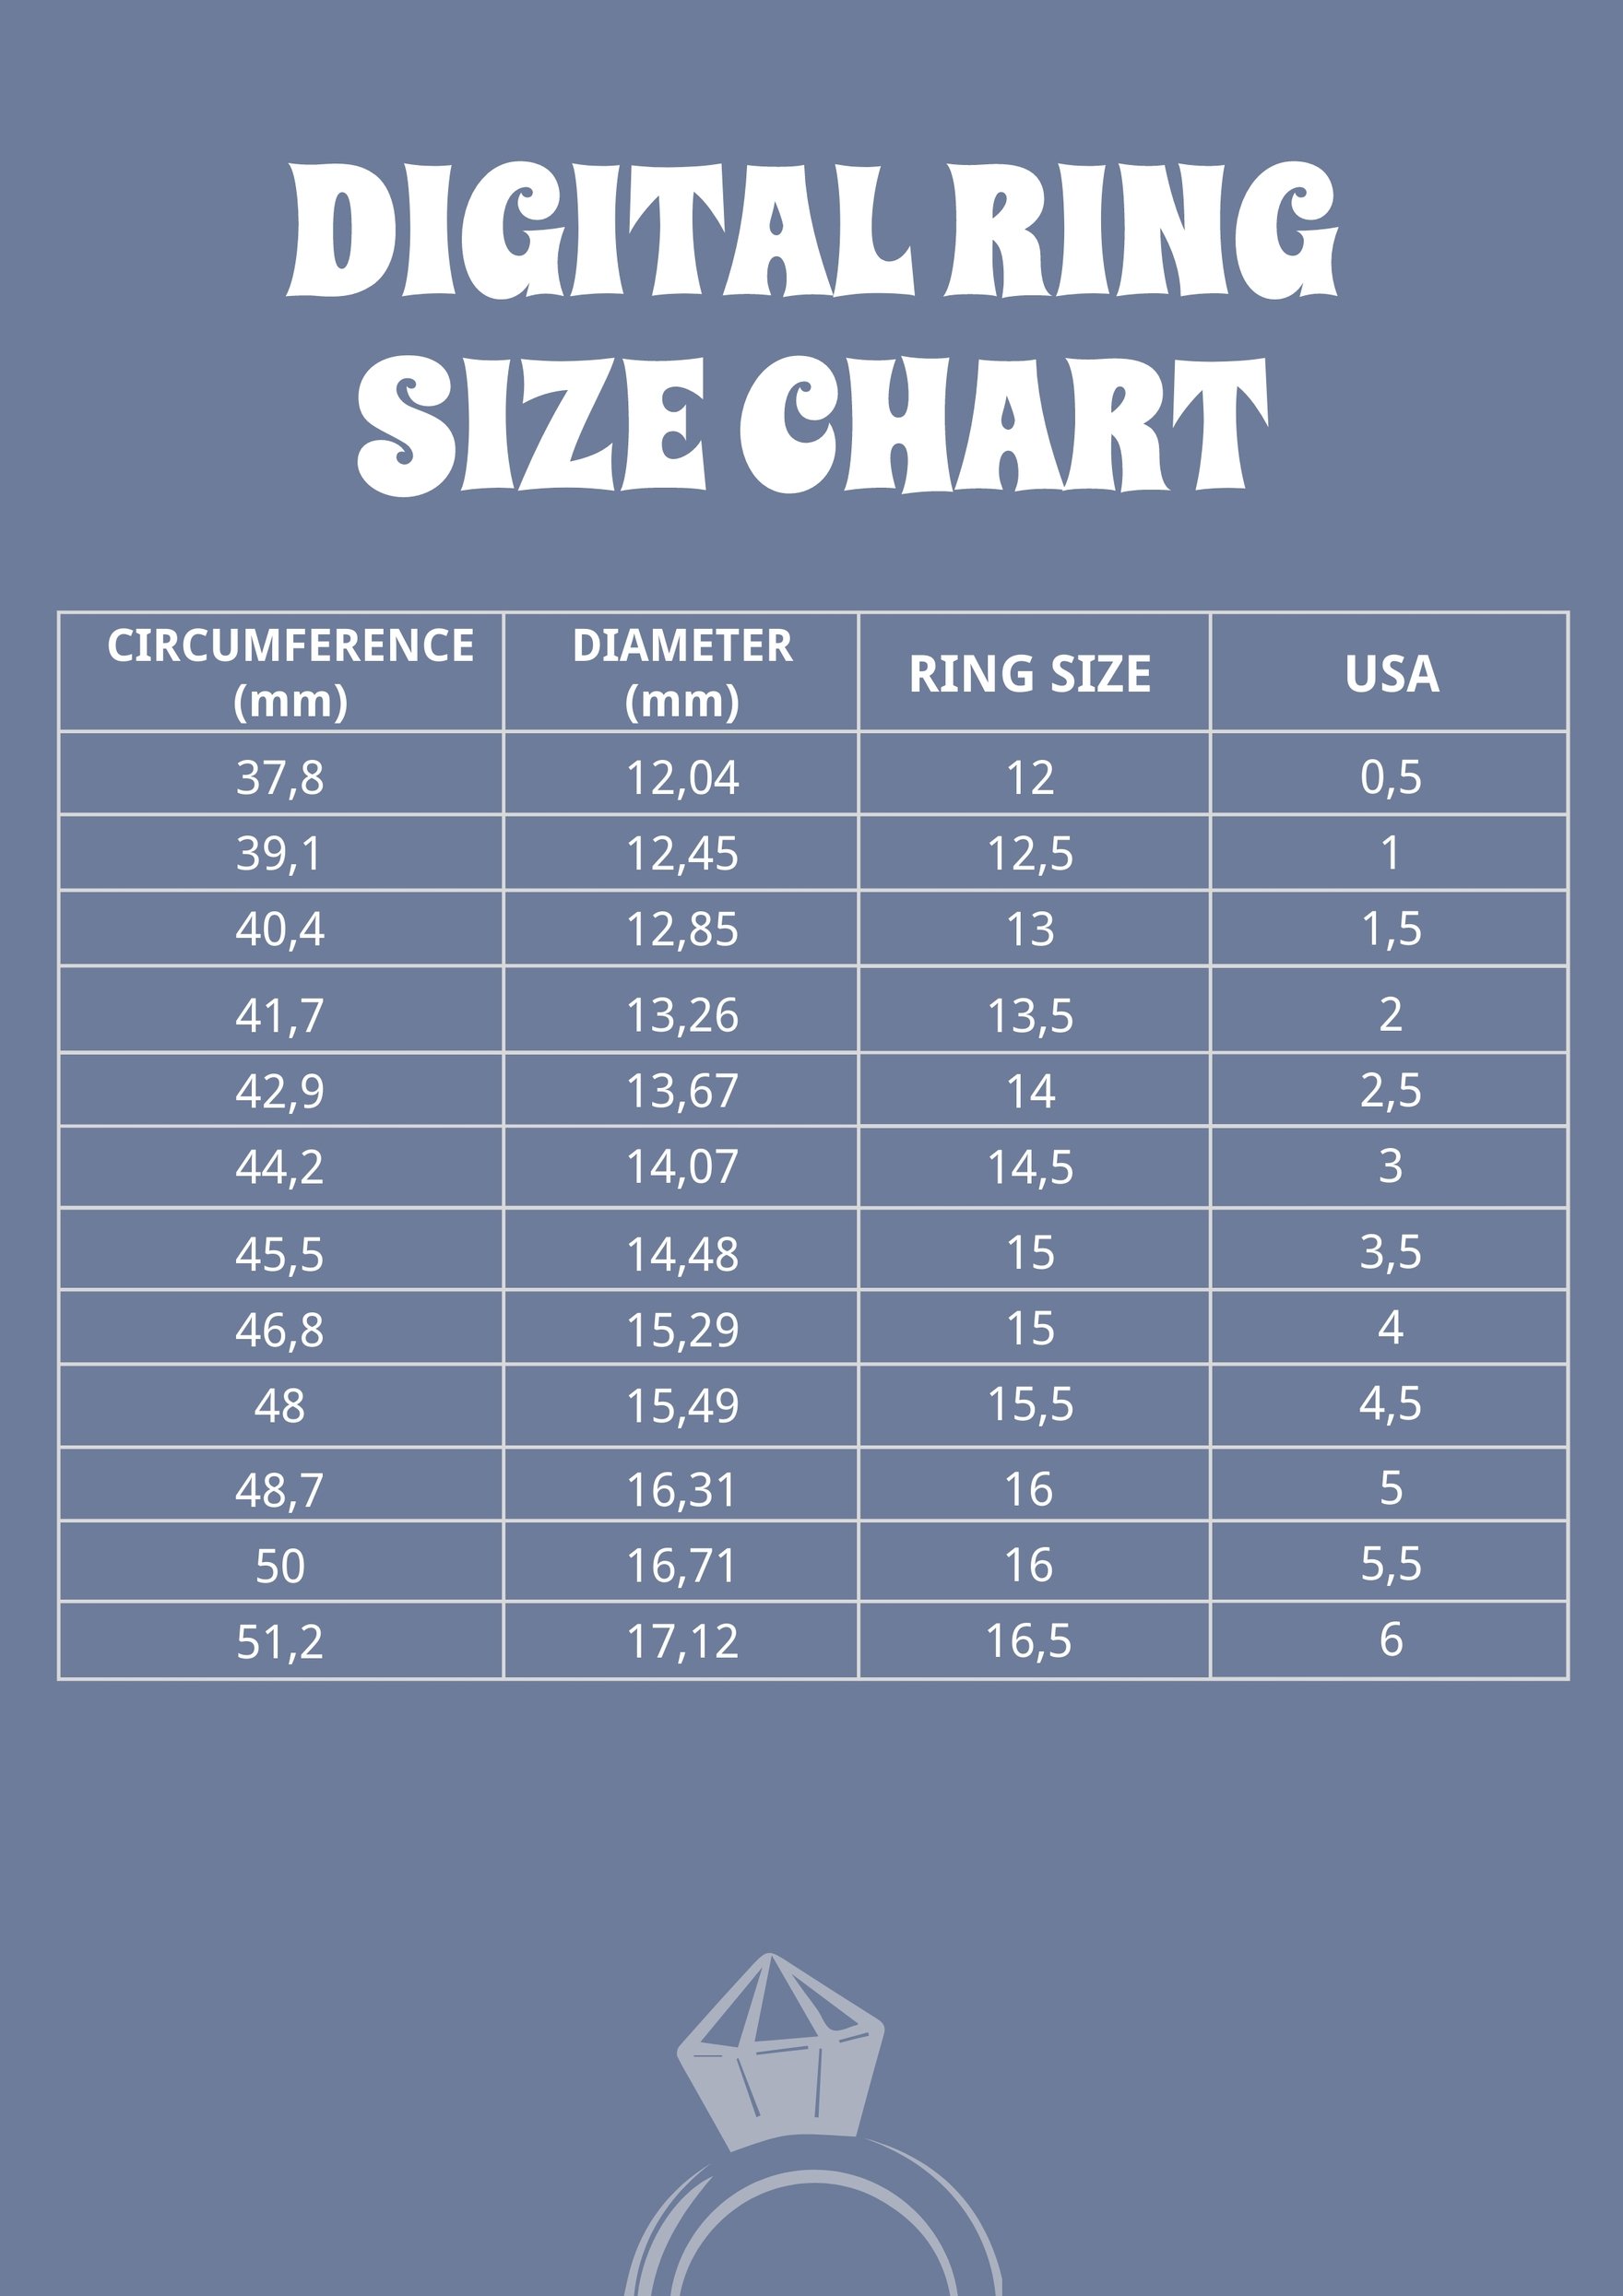 Digital Ring Size Chart Template in PDF, Illustrator